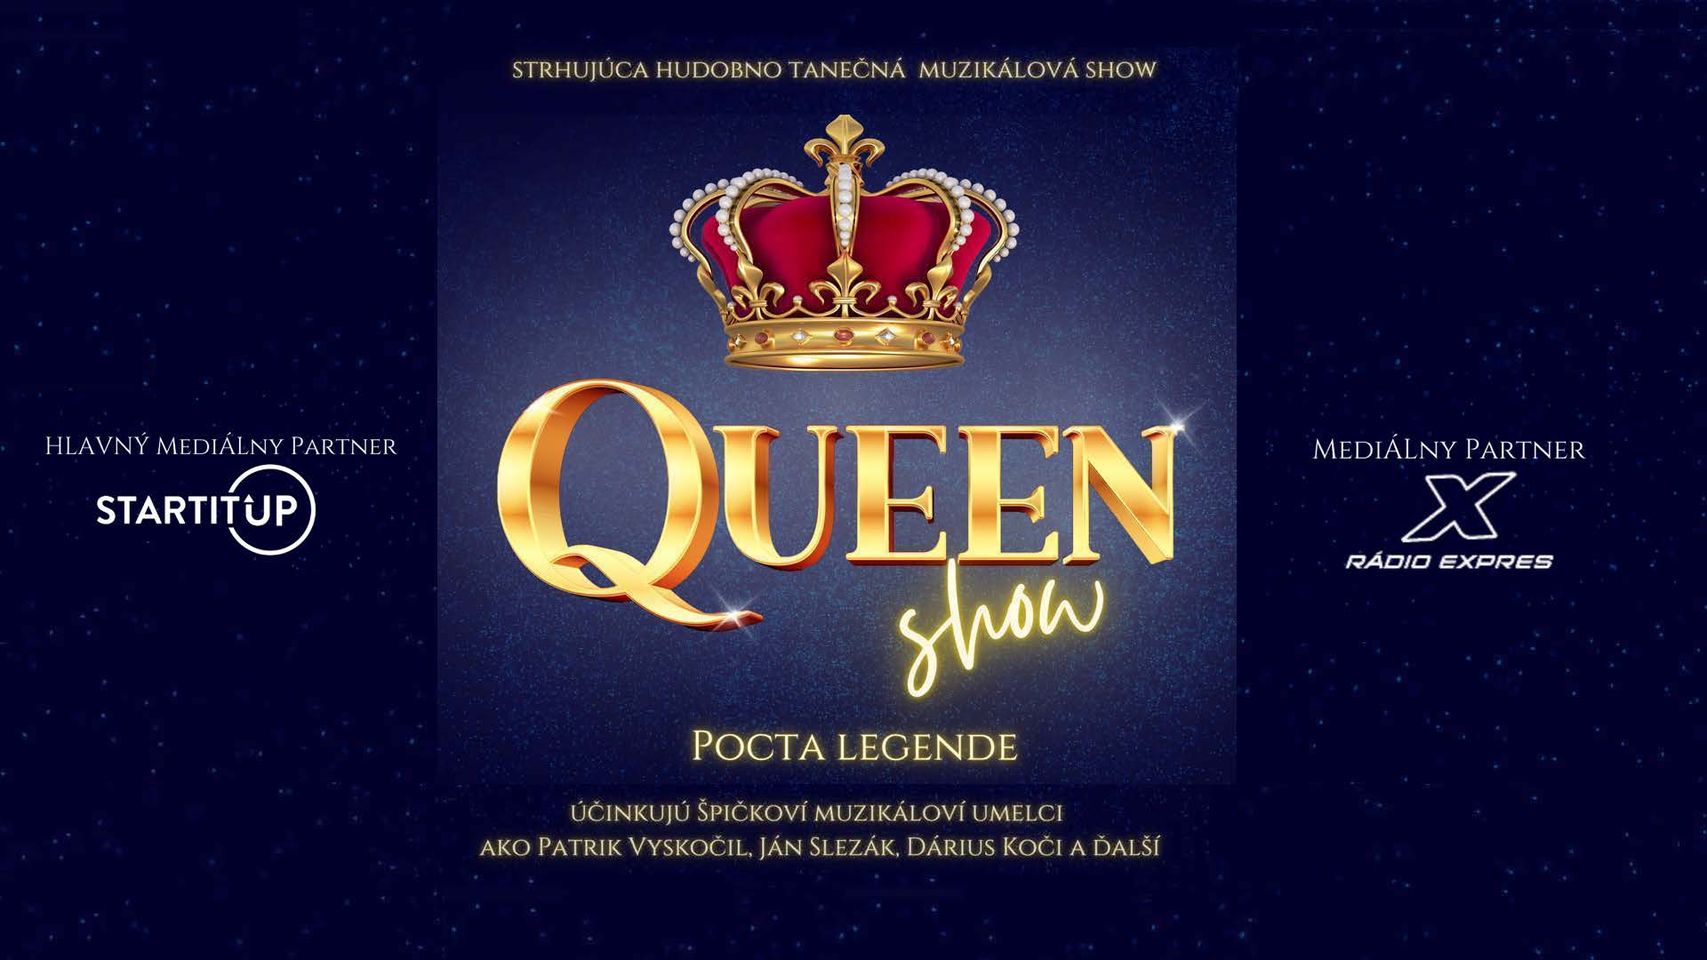 queen show – pocta legende Dom armády